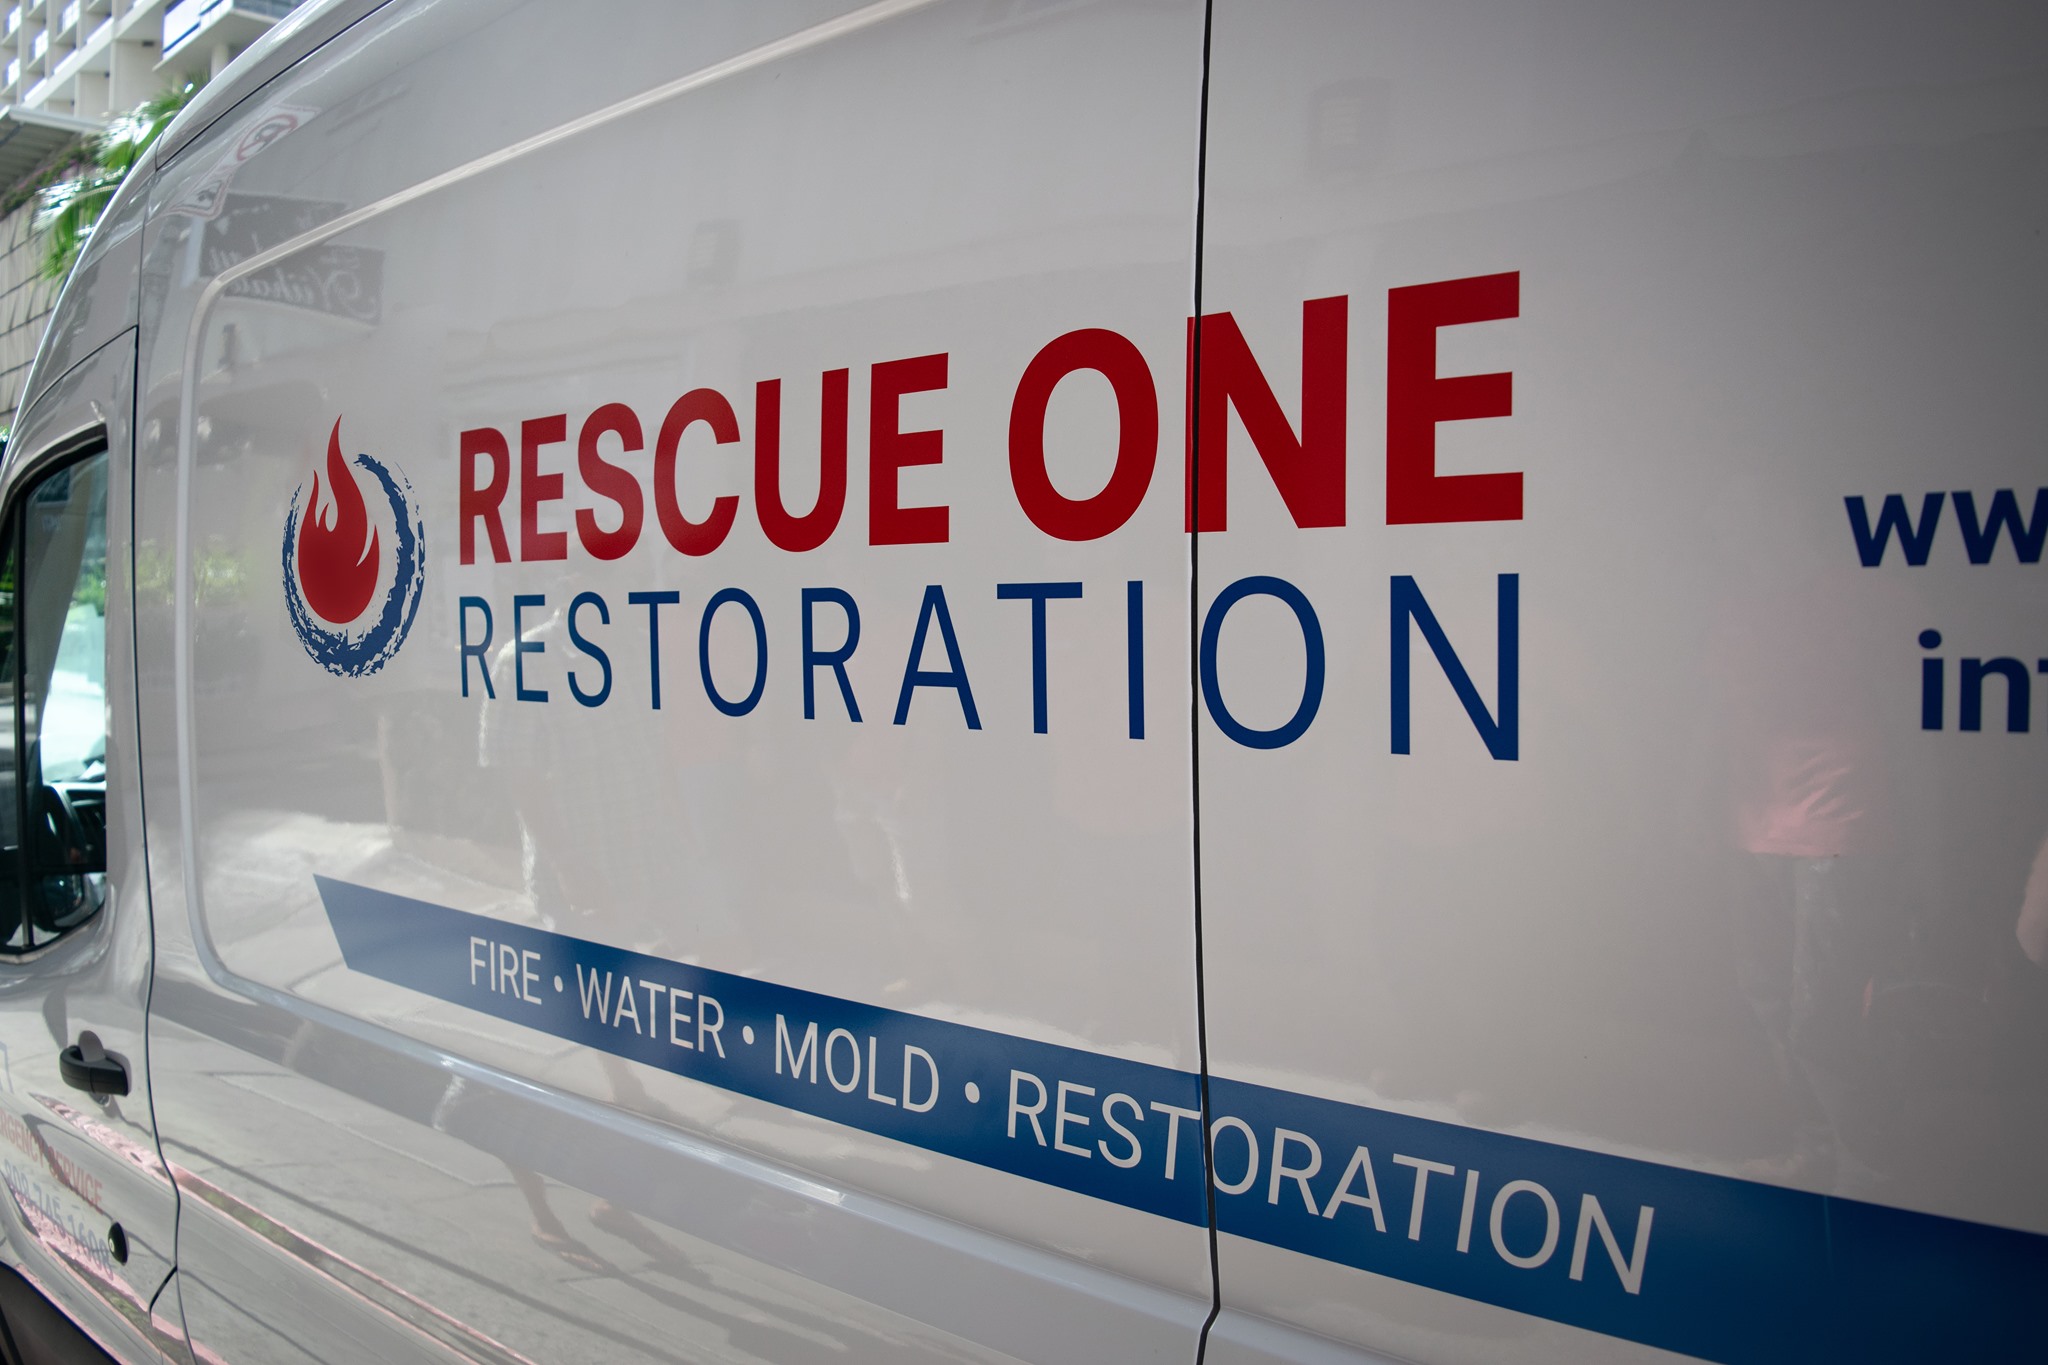 Rescue One Restoration